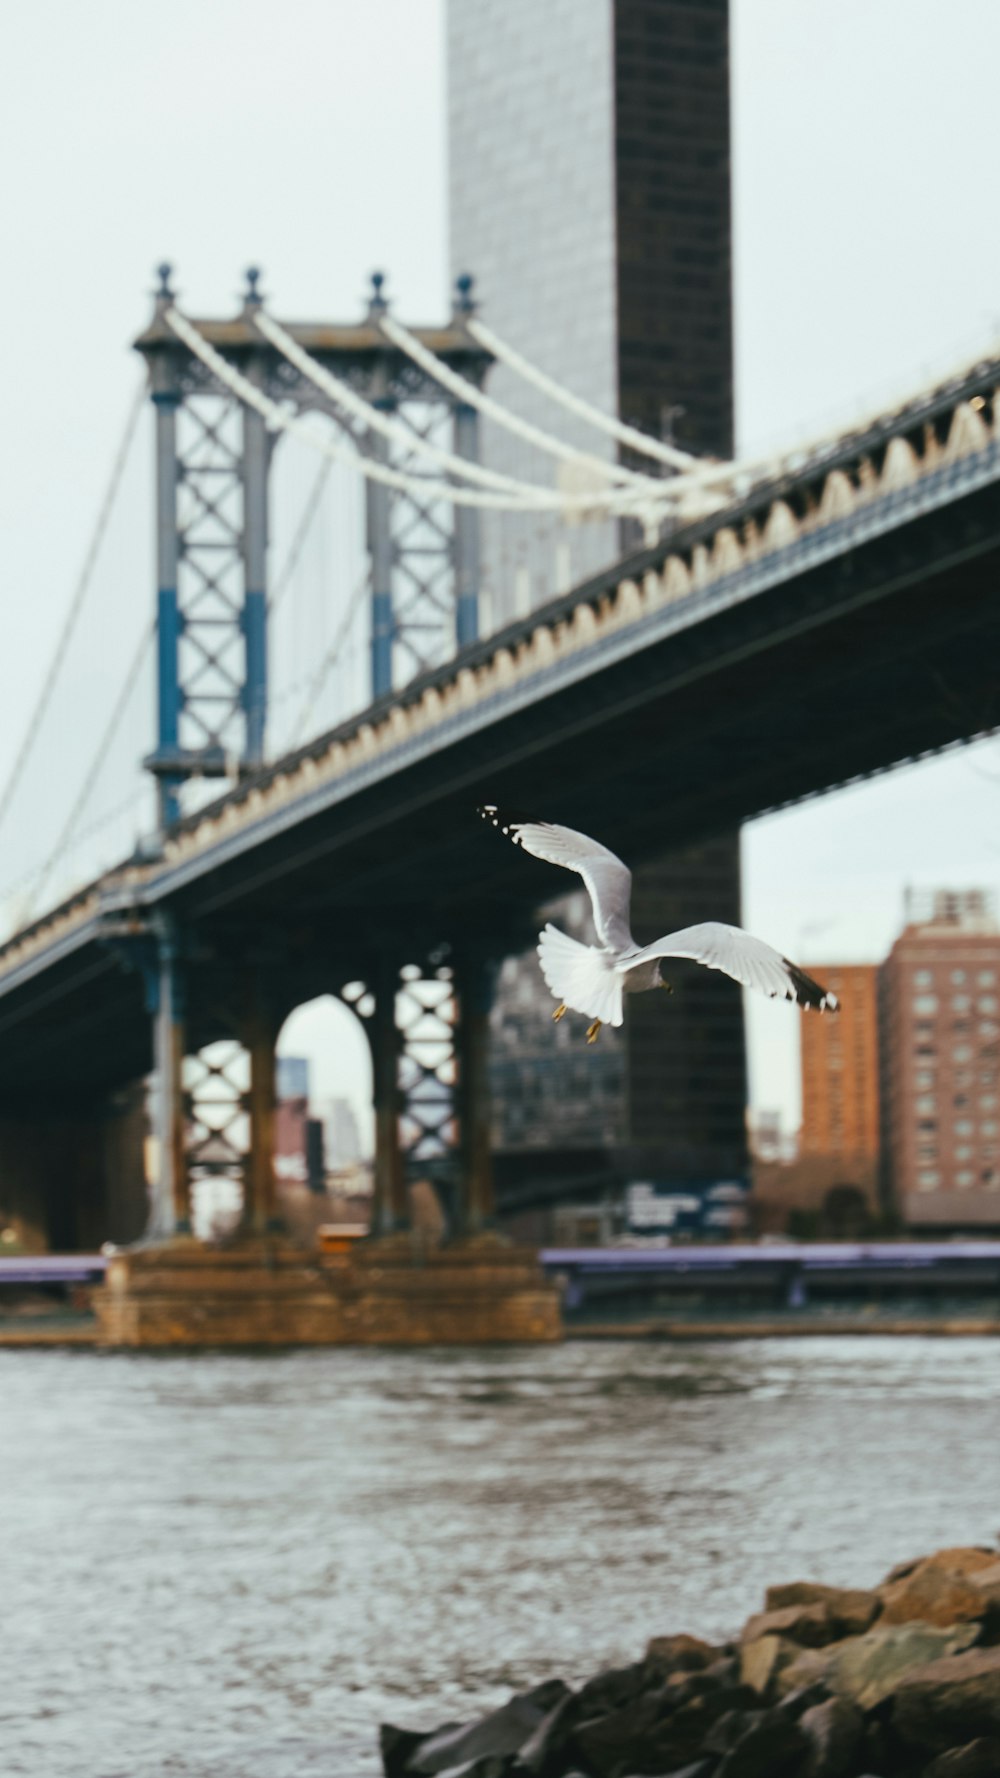 a bird flying over a body of water near a bridge